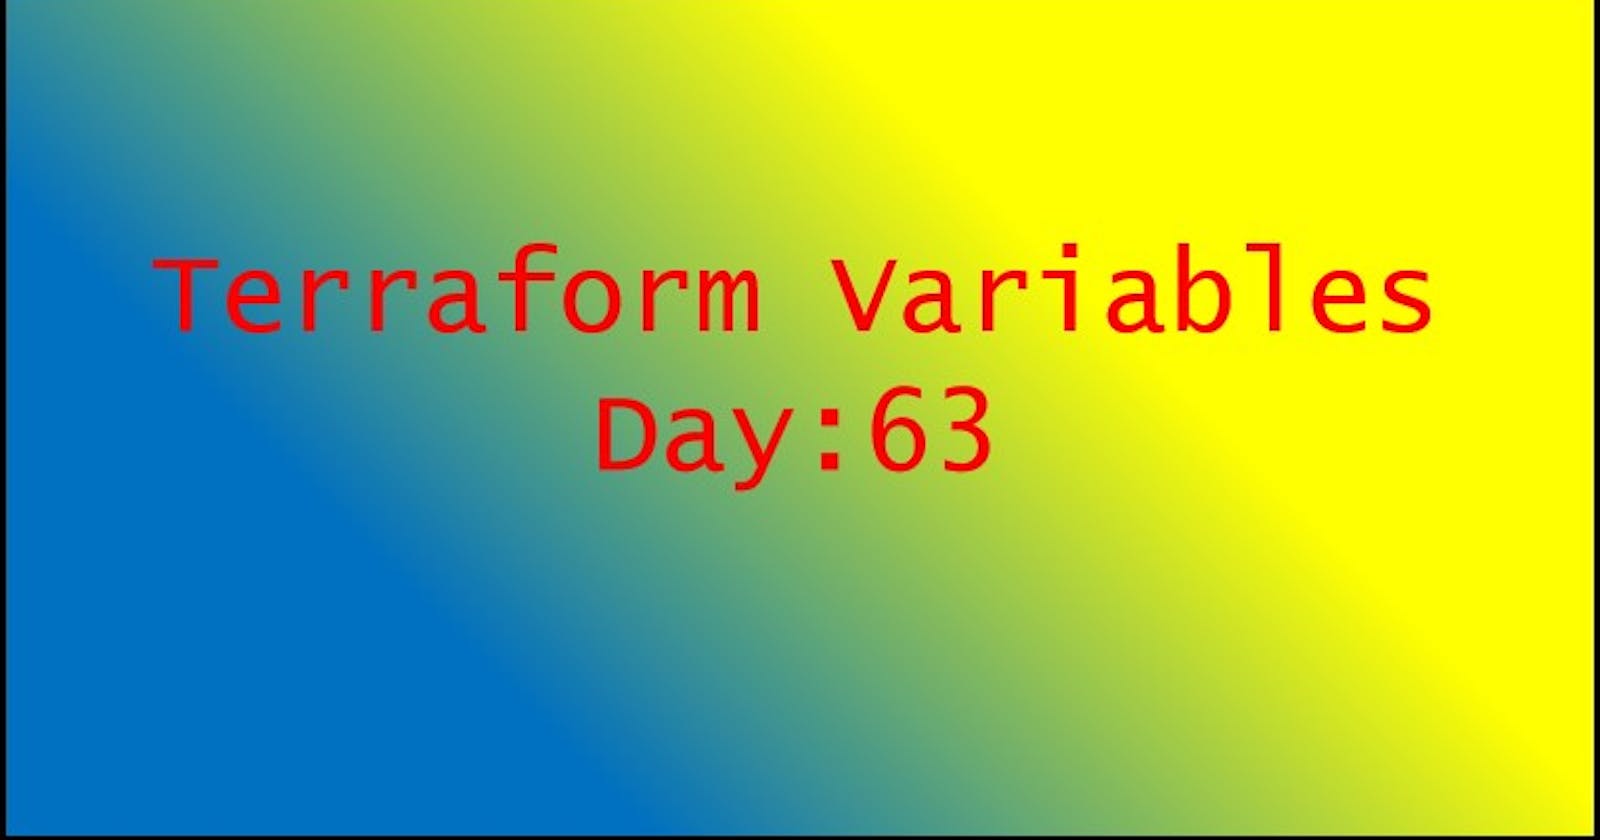 Day63: Terraform Variables